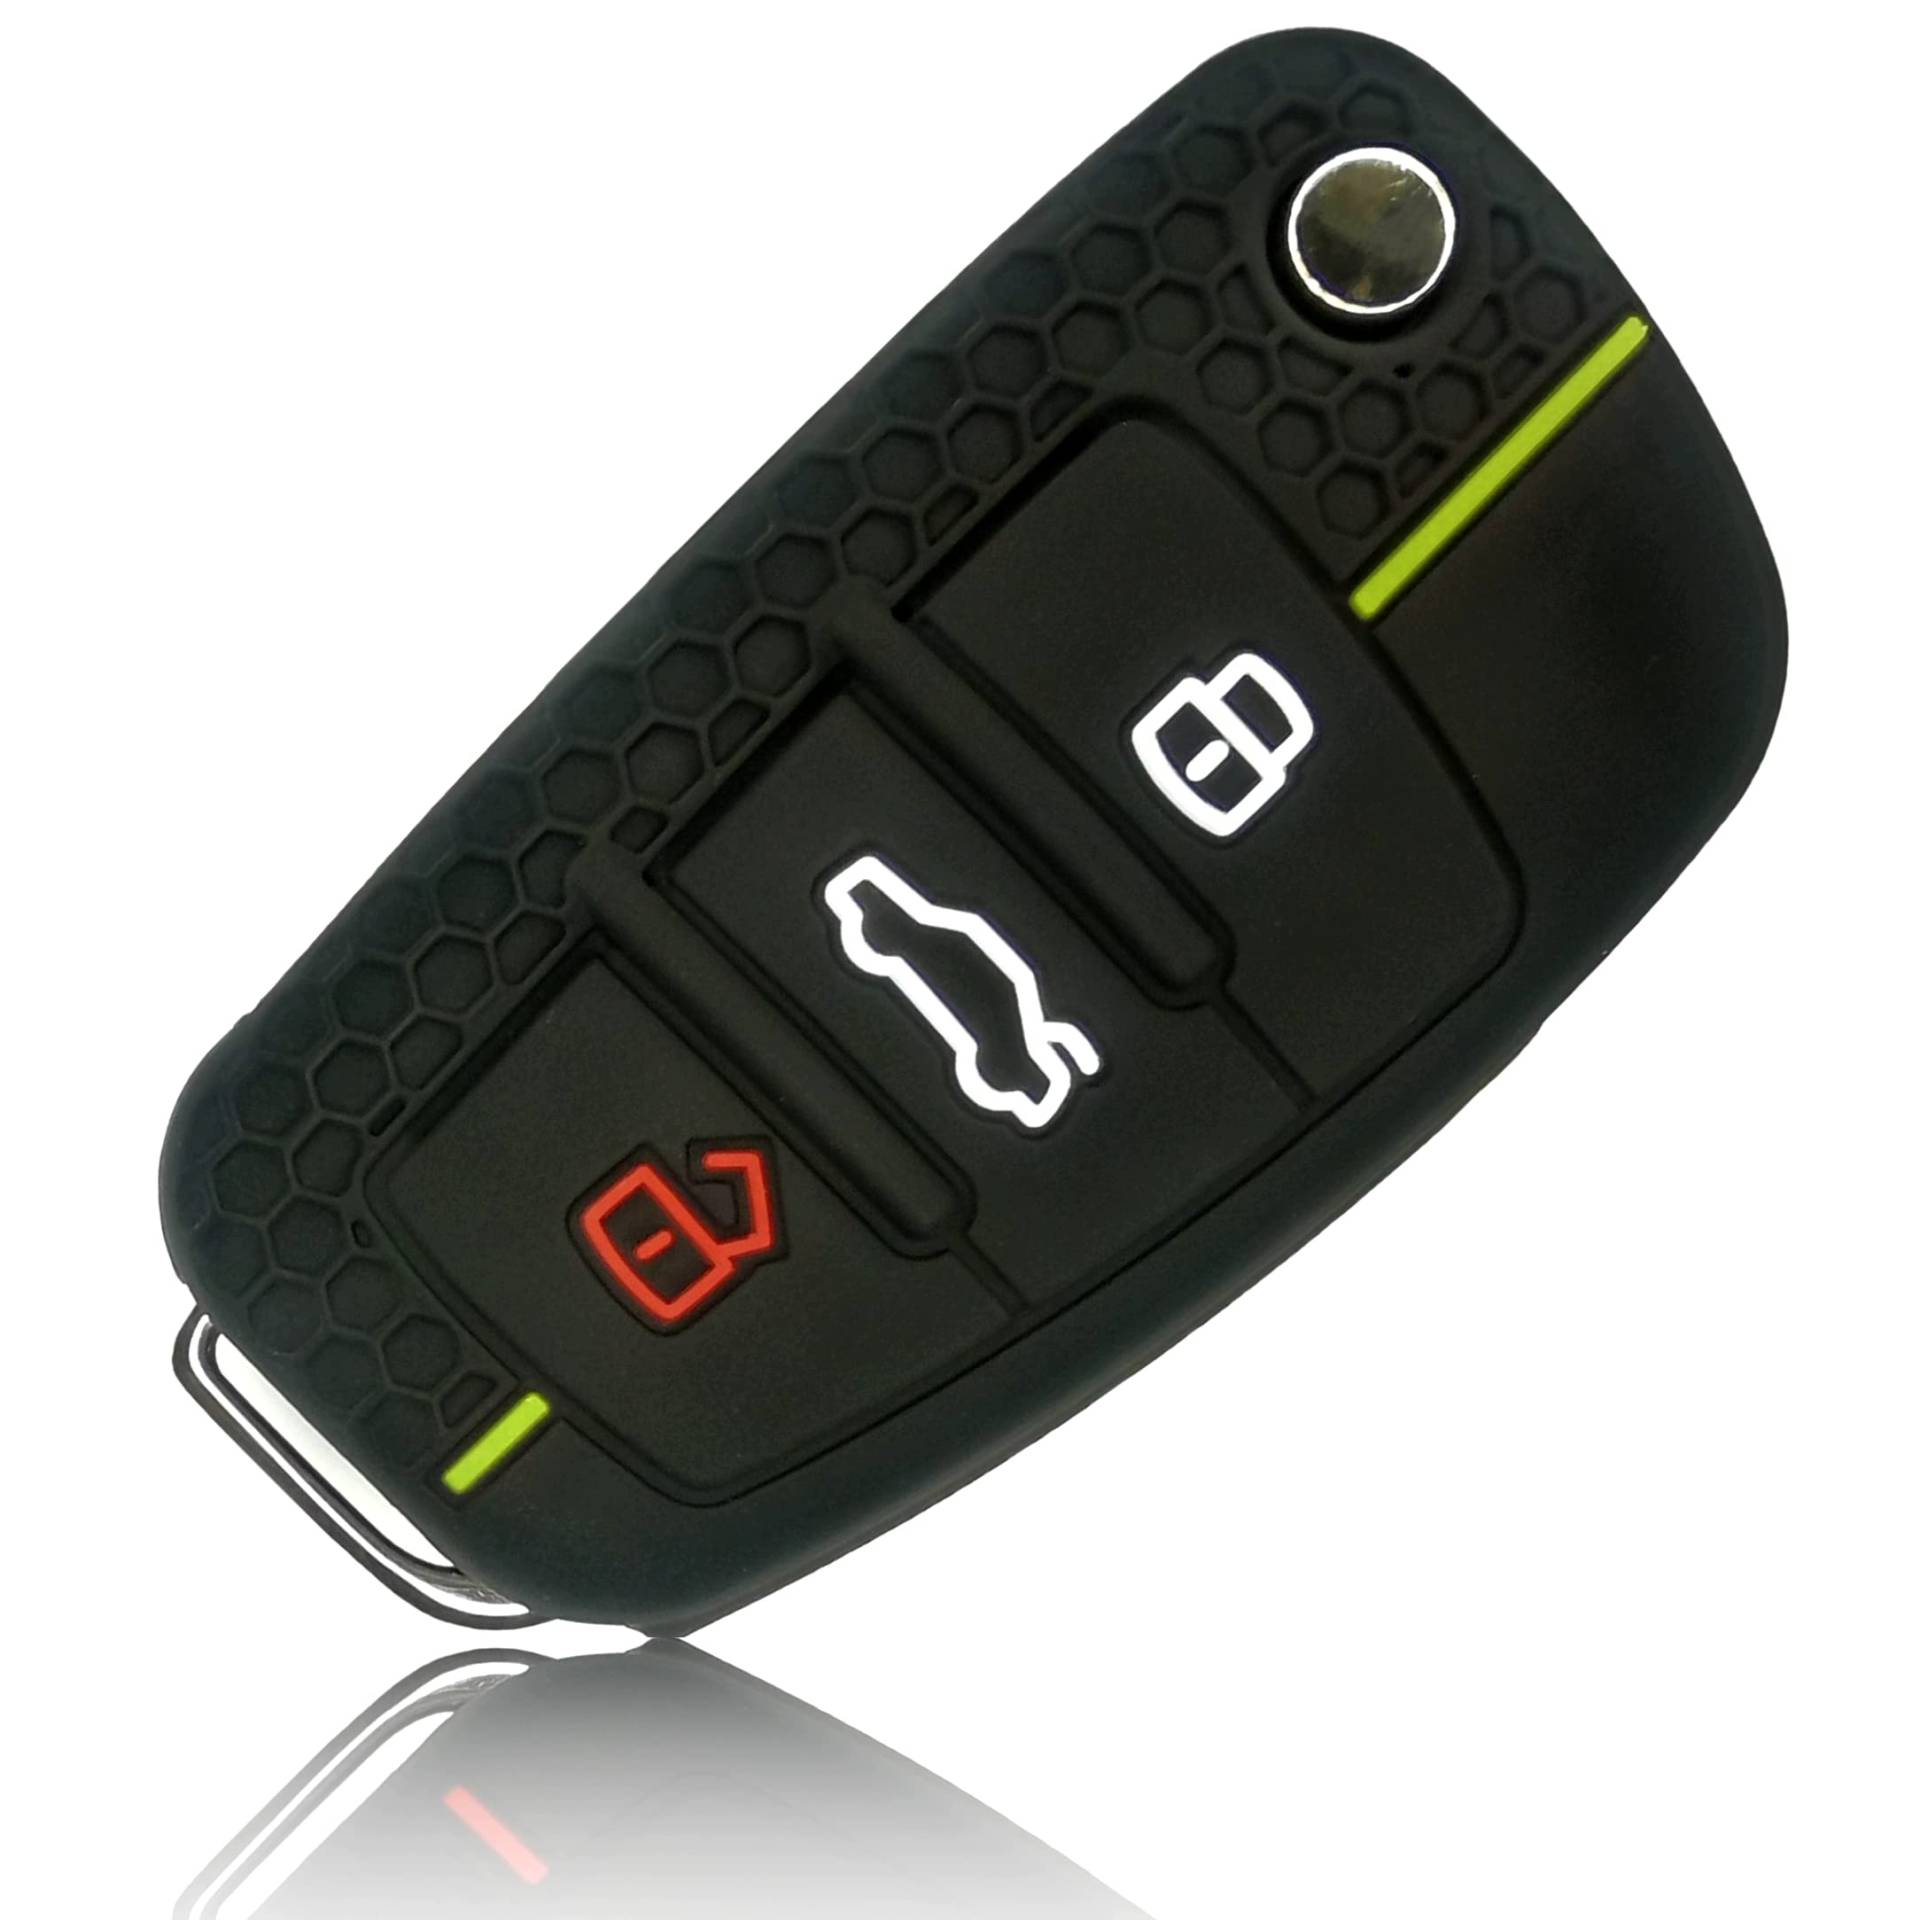 FOAMO Autoschlüssel Hülle kompatibel mit Audi 3-Tasten Klappschlüssel - Silikon Schutzhülle Cover Schlüssel-Hülle in Schwarz-Apfel-Grün von FOAMO